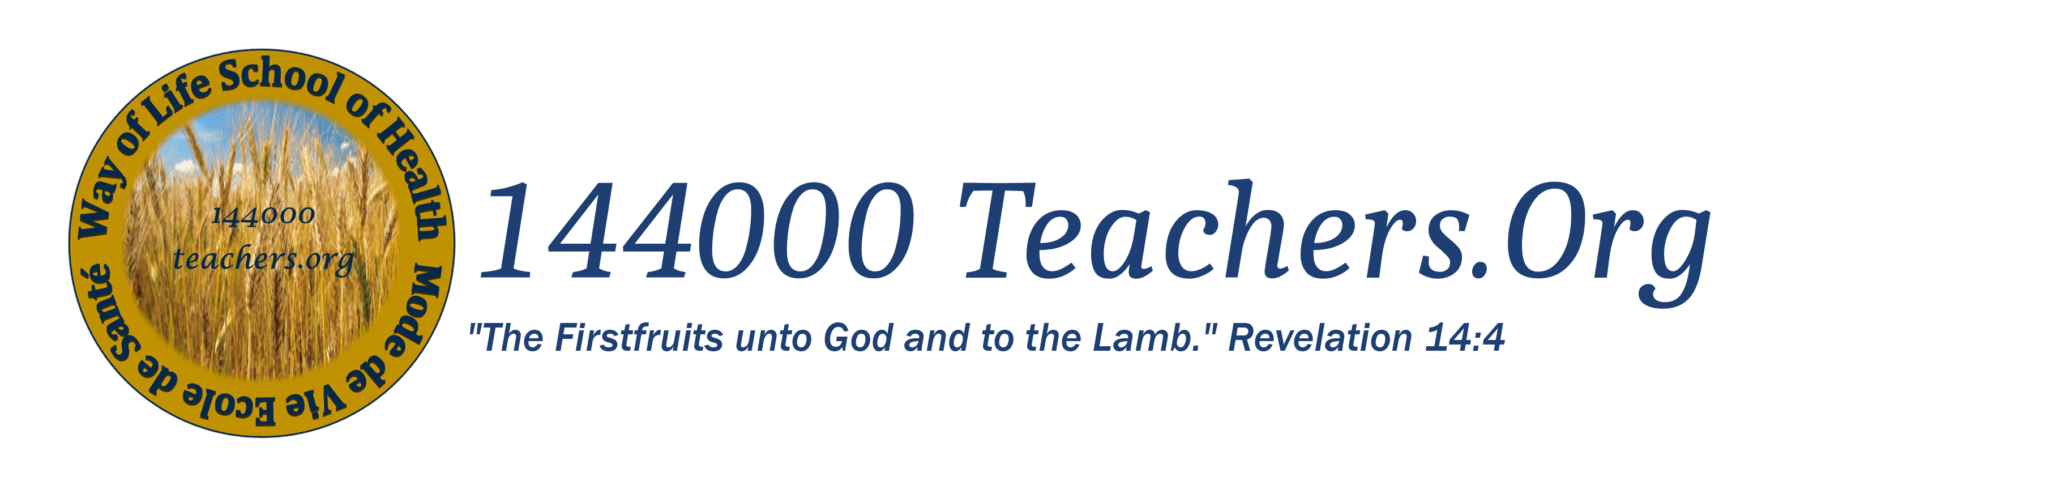 144000 Teachers.Org